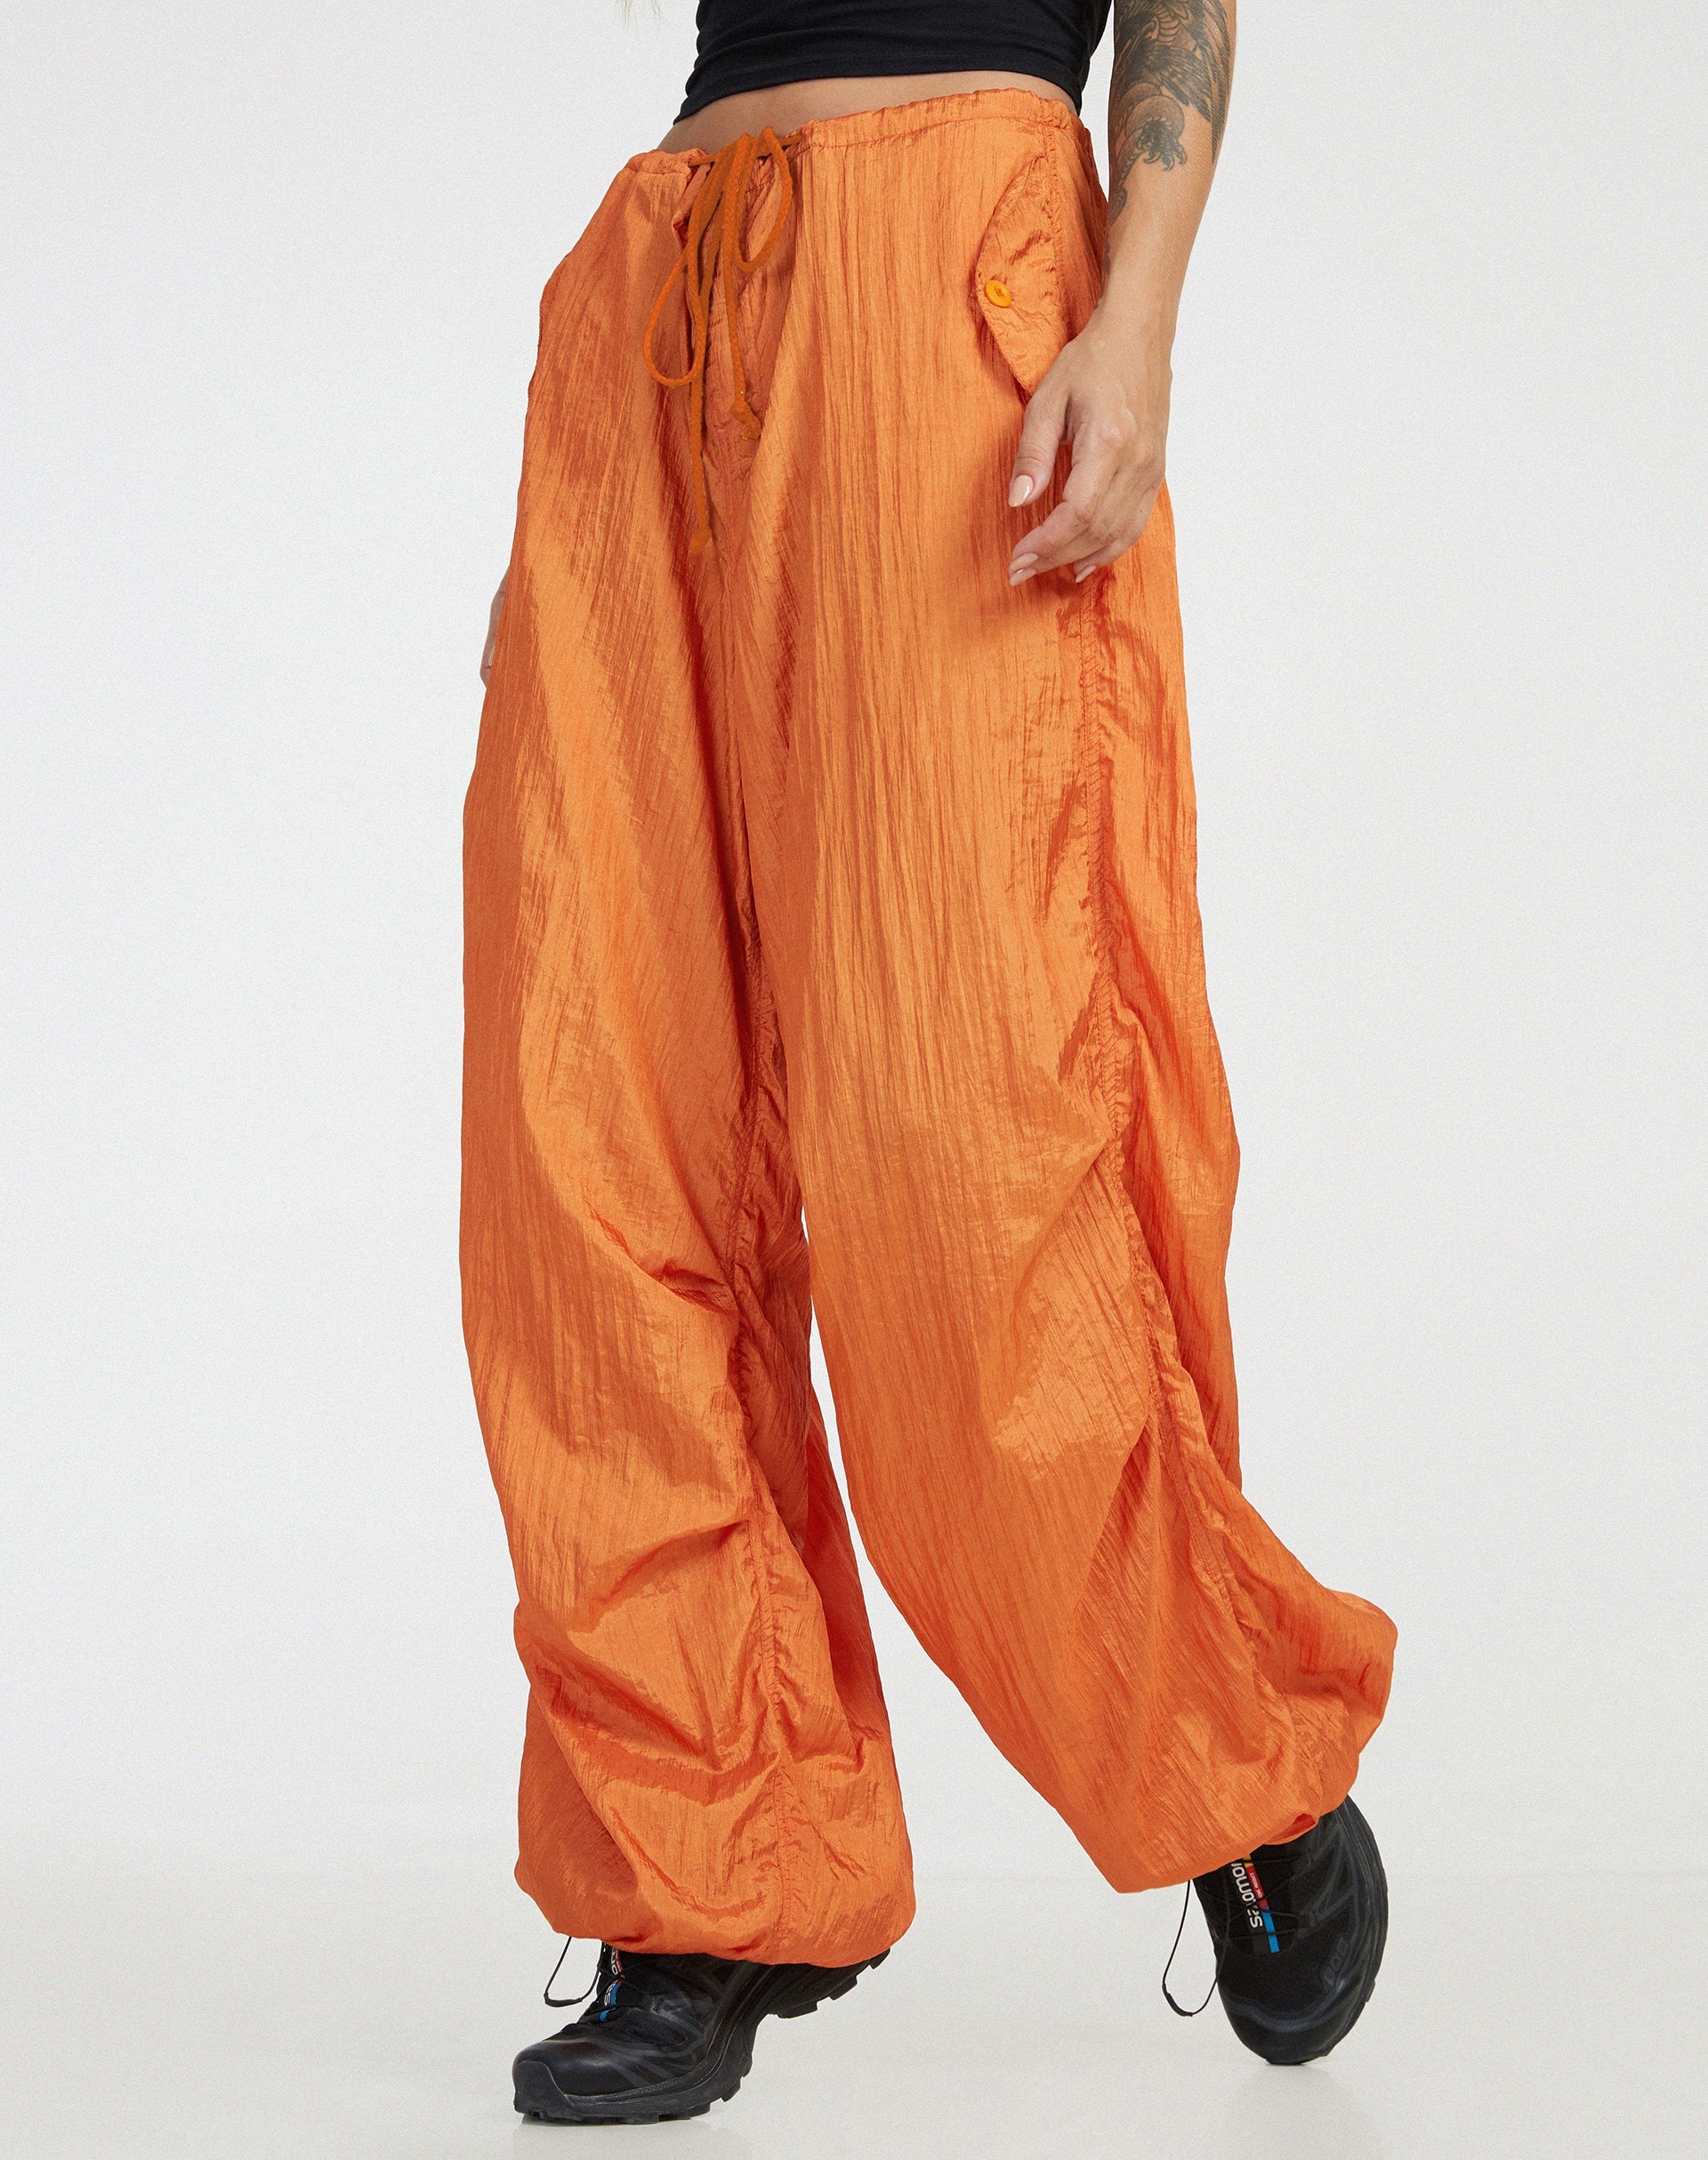 image of Chute Trouser in Parachute Pumpkin Orange